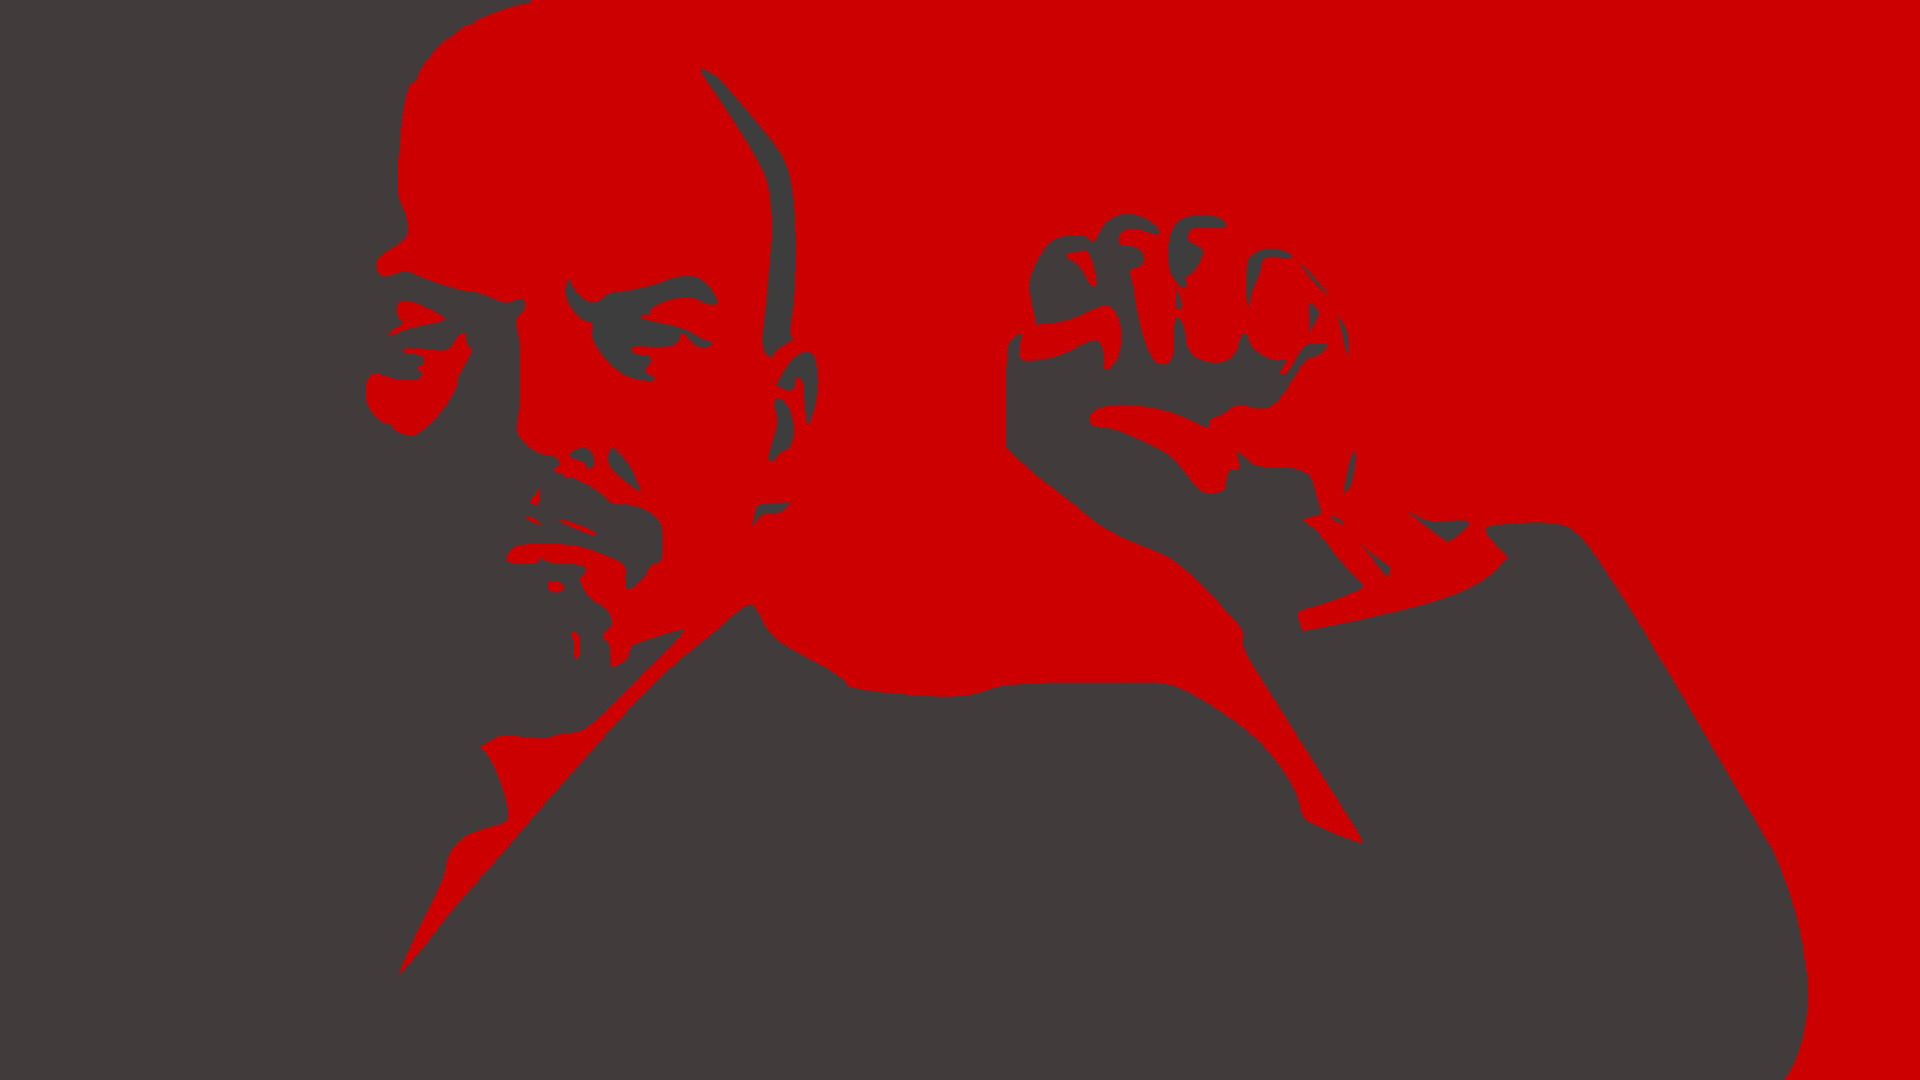 Lenin wallpaper collection, High-quality images, Desktop backgrounds, Revolutionary leader, 1920x1080 Full HD Desktop